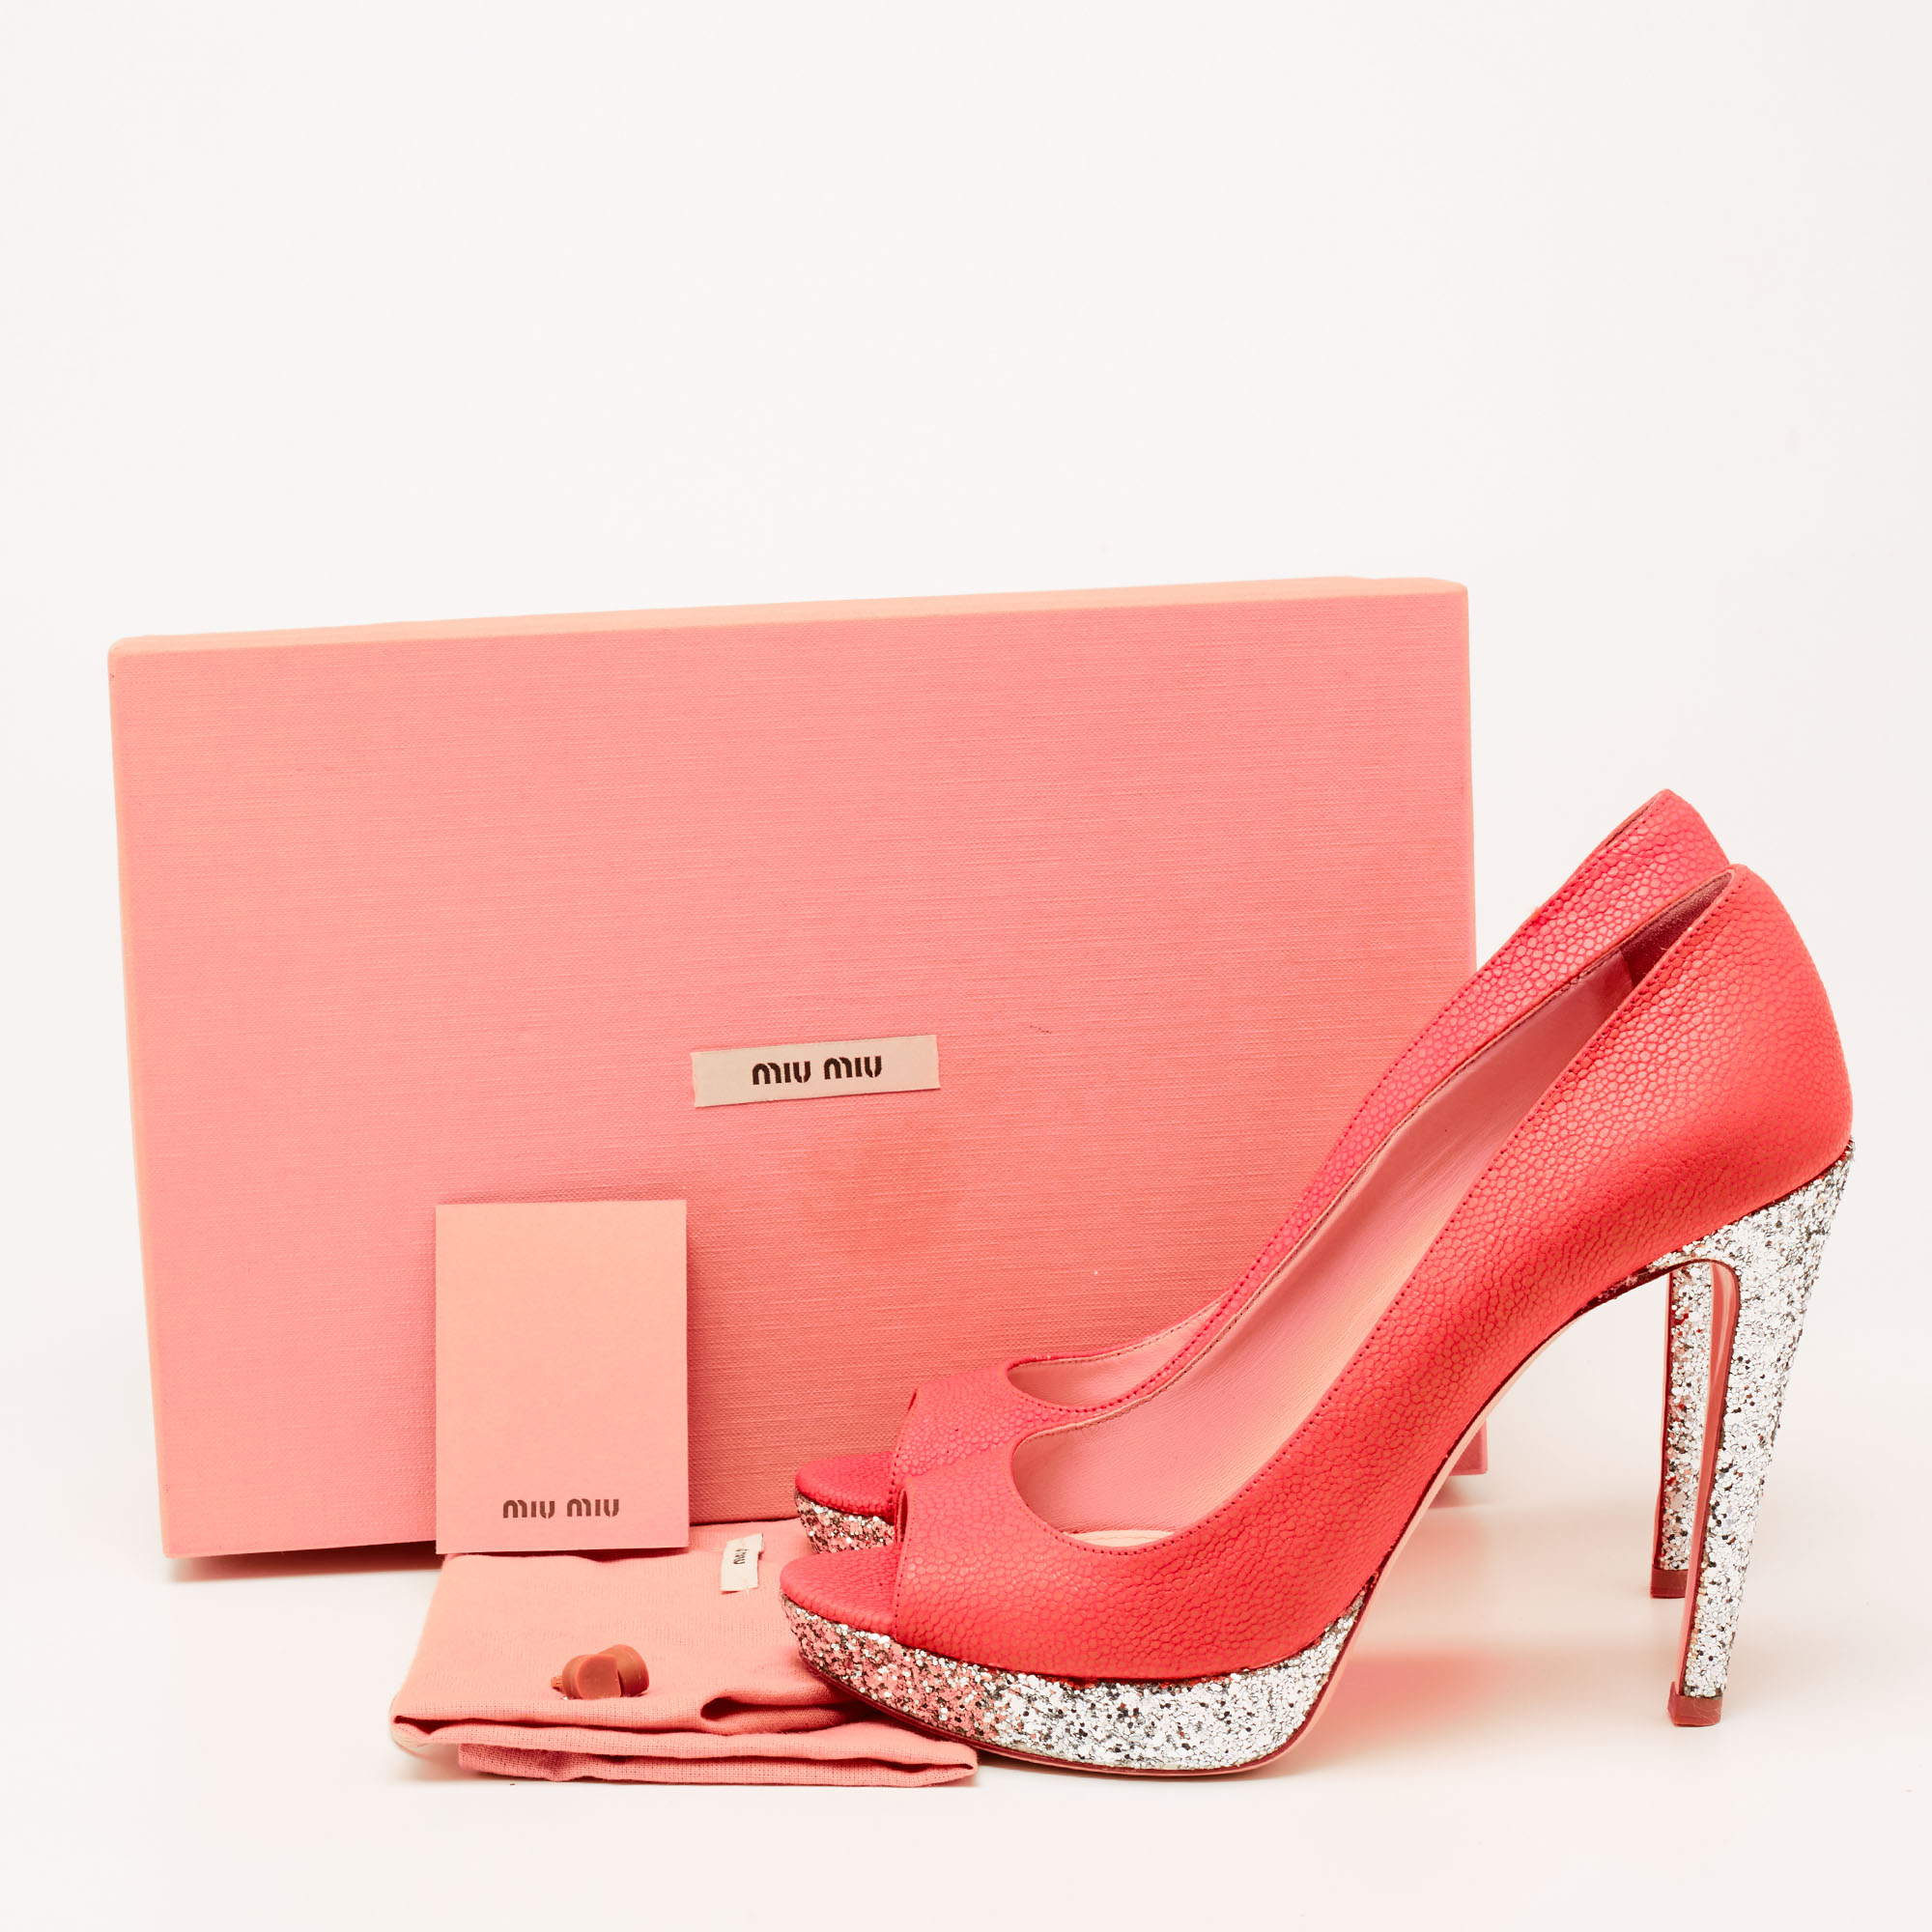 Miu Miu Neon Pink Leather And Glitter Peep Toe Platform Pumps Size 38.5